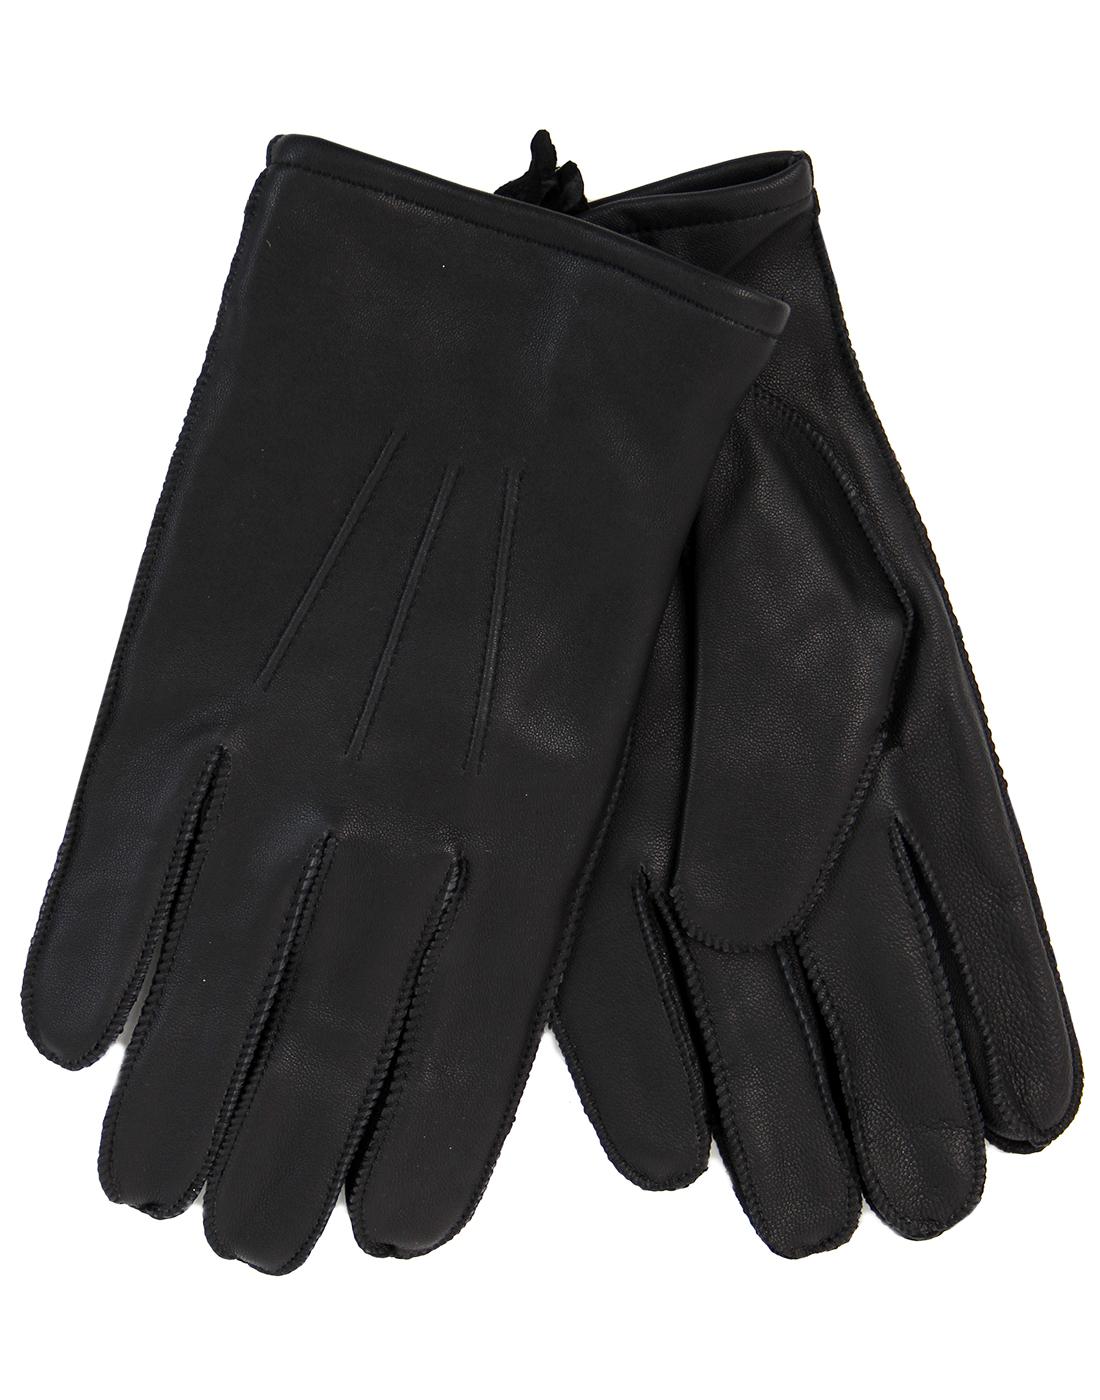 GIBSON LONDON Men's Retro Black Leather Gloves